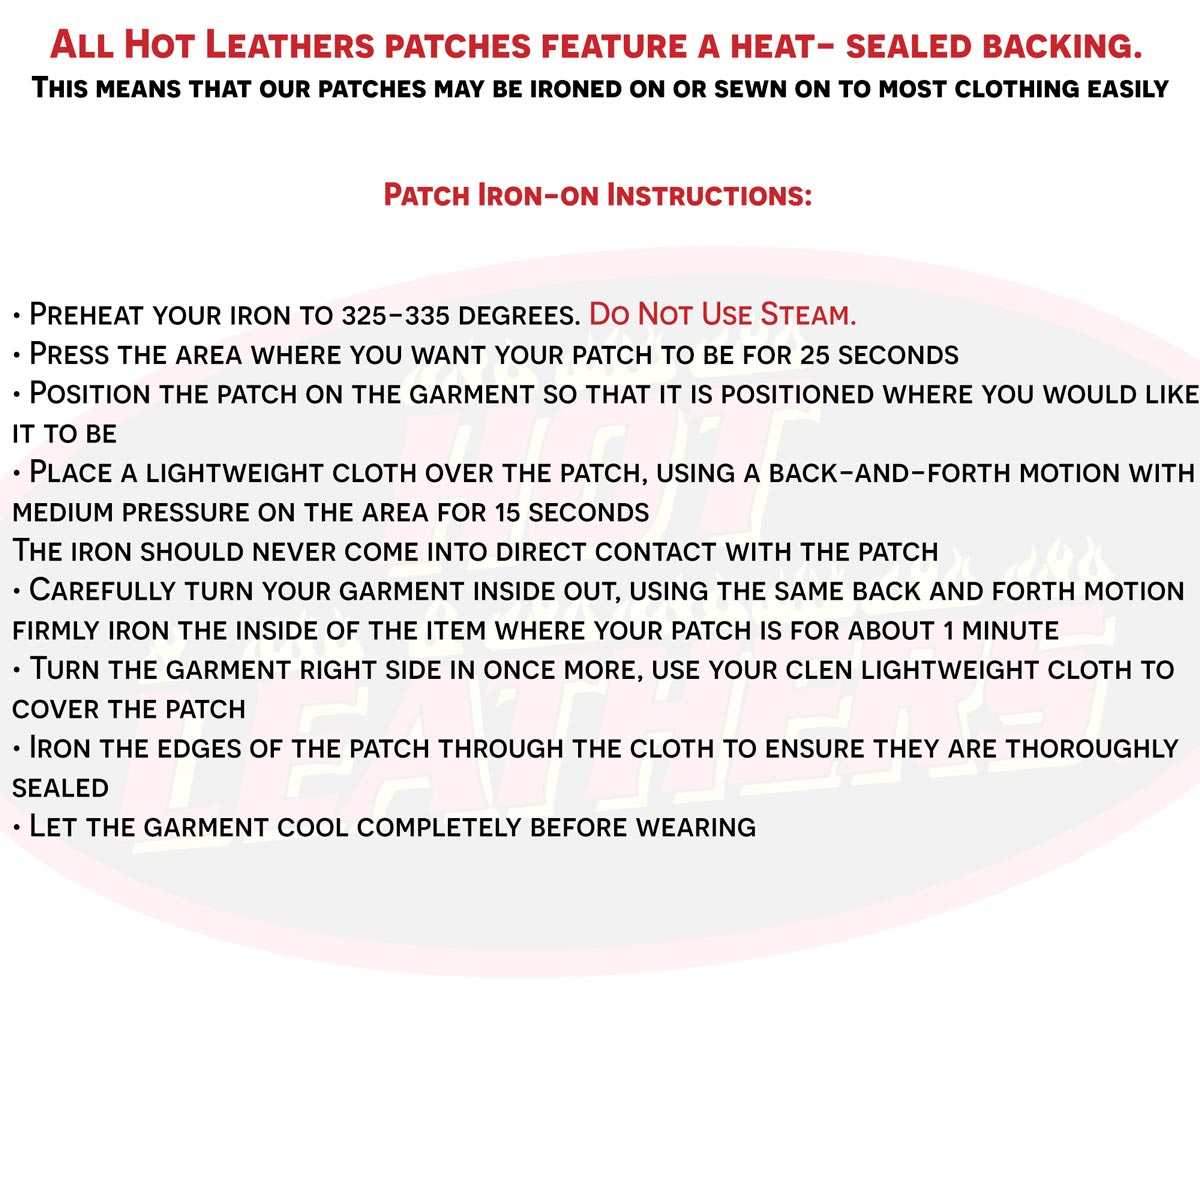 Hot Leathers PPA9082 Bandage 4"x2" Patch